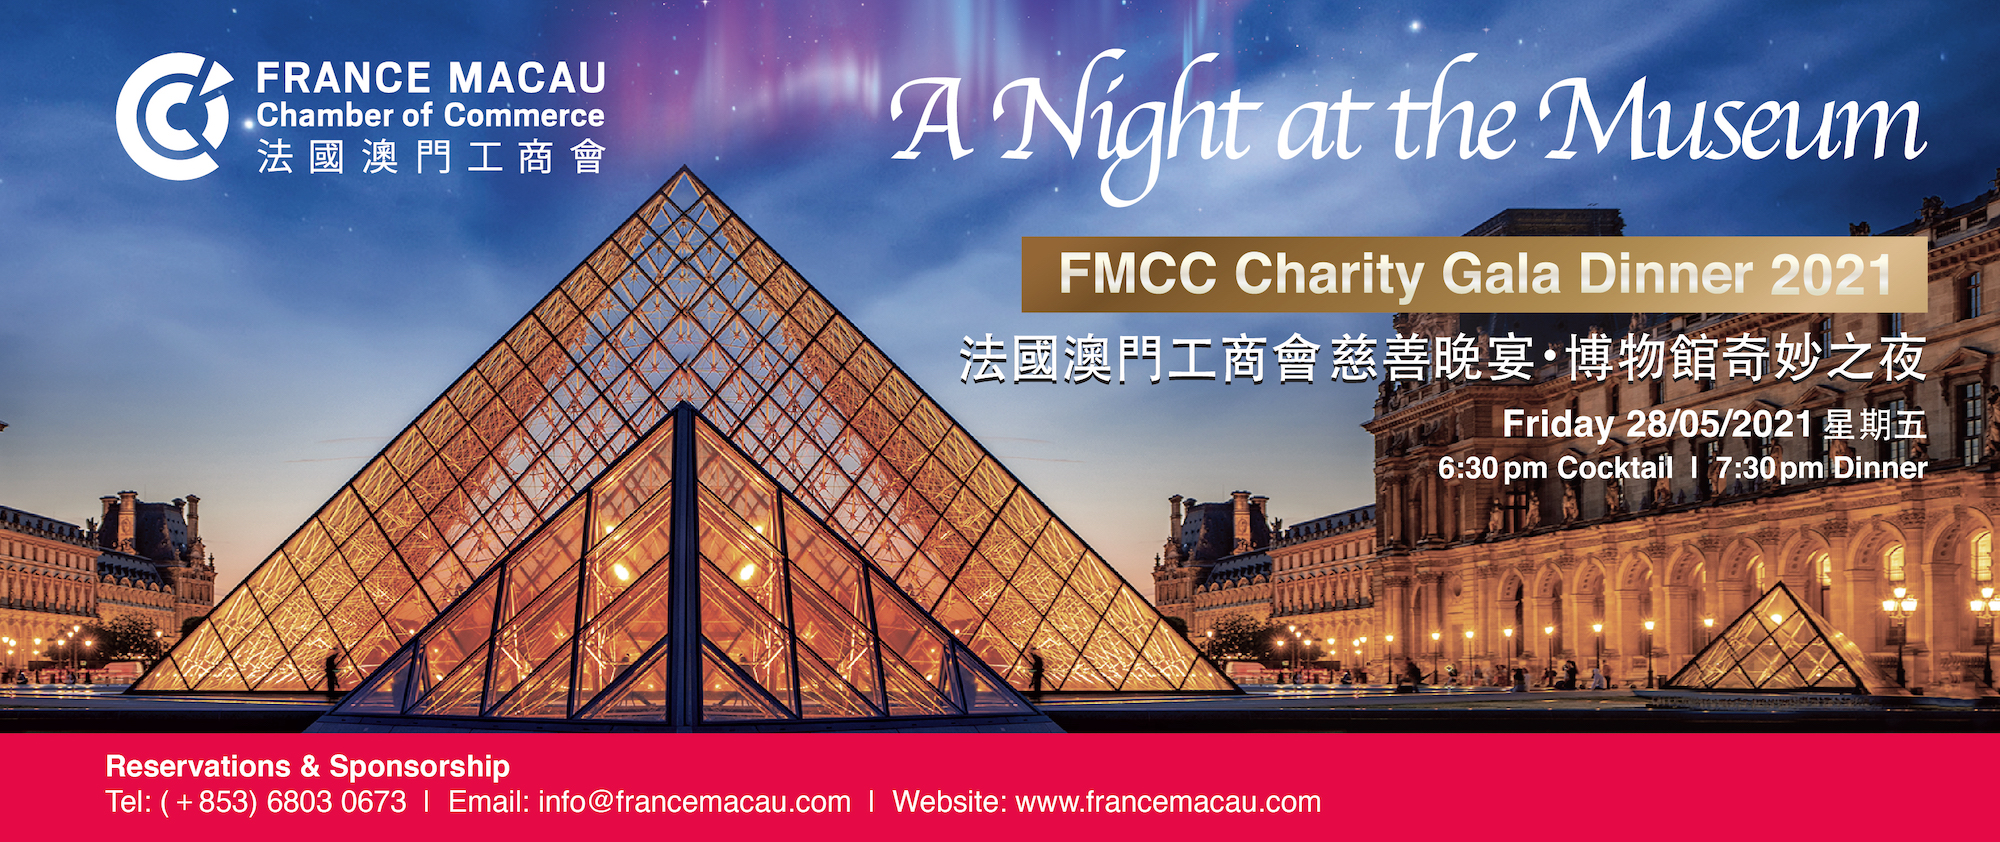 FMCC Charity Gala Dinner this weekend macau